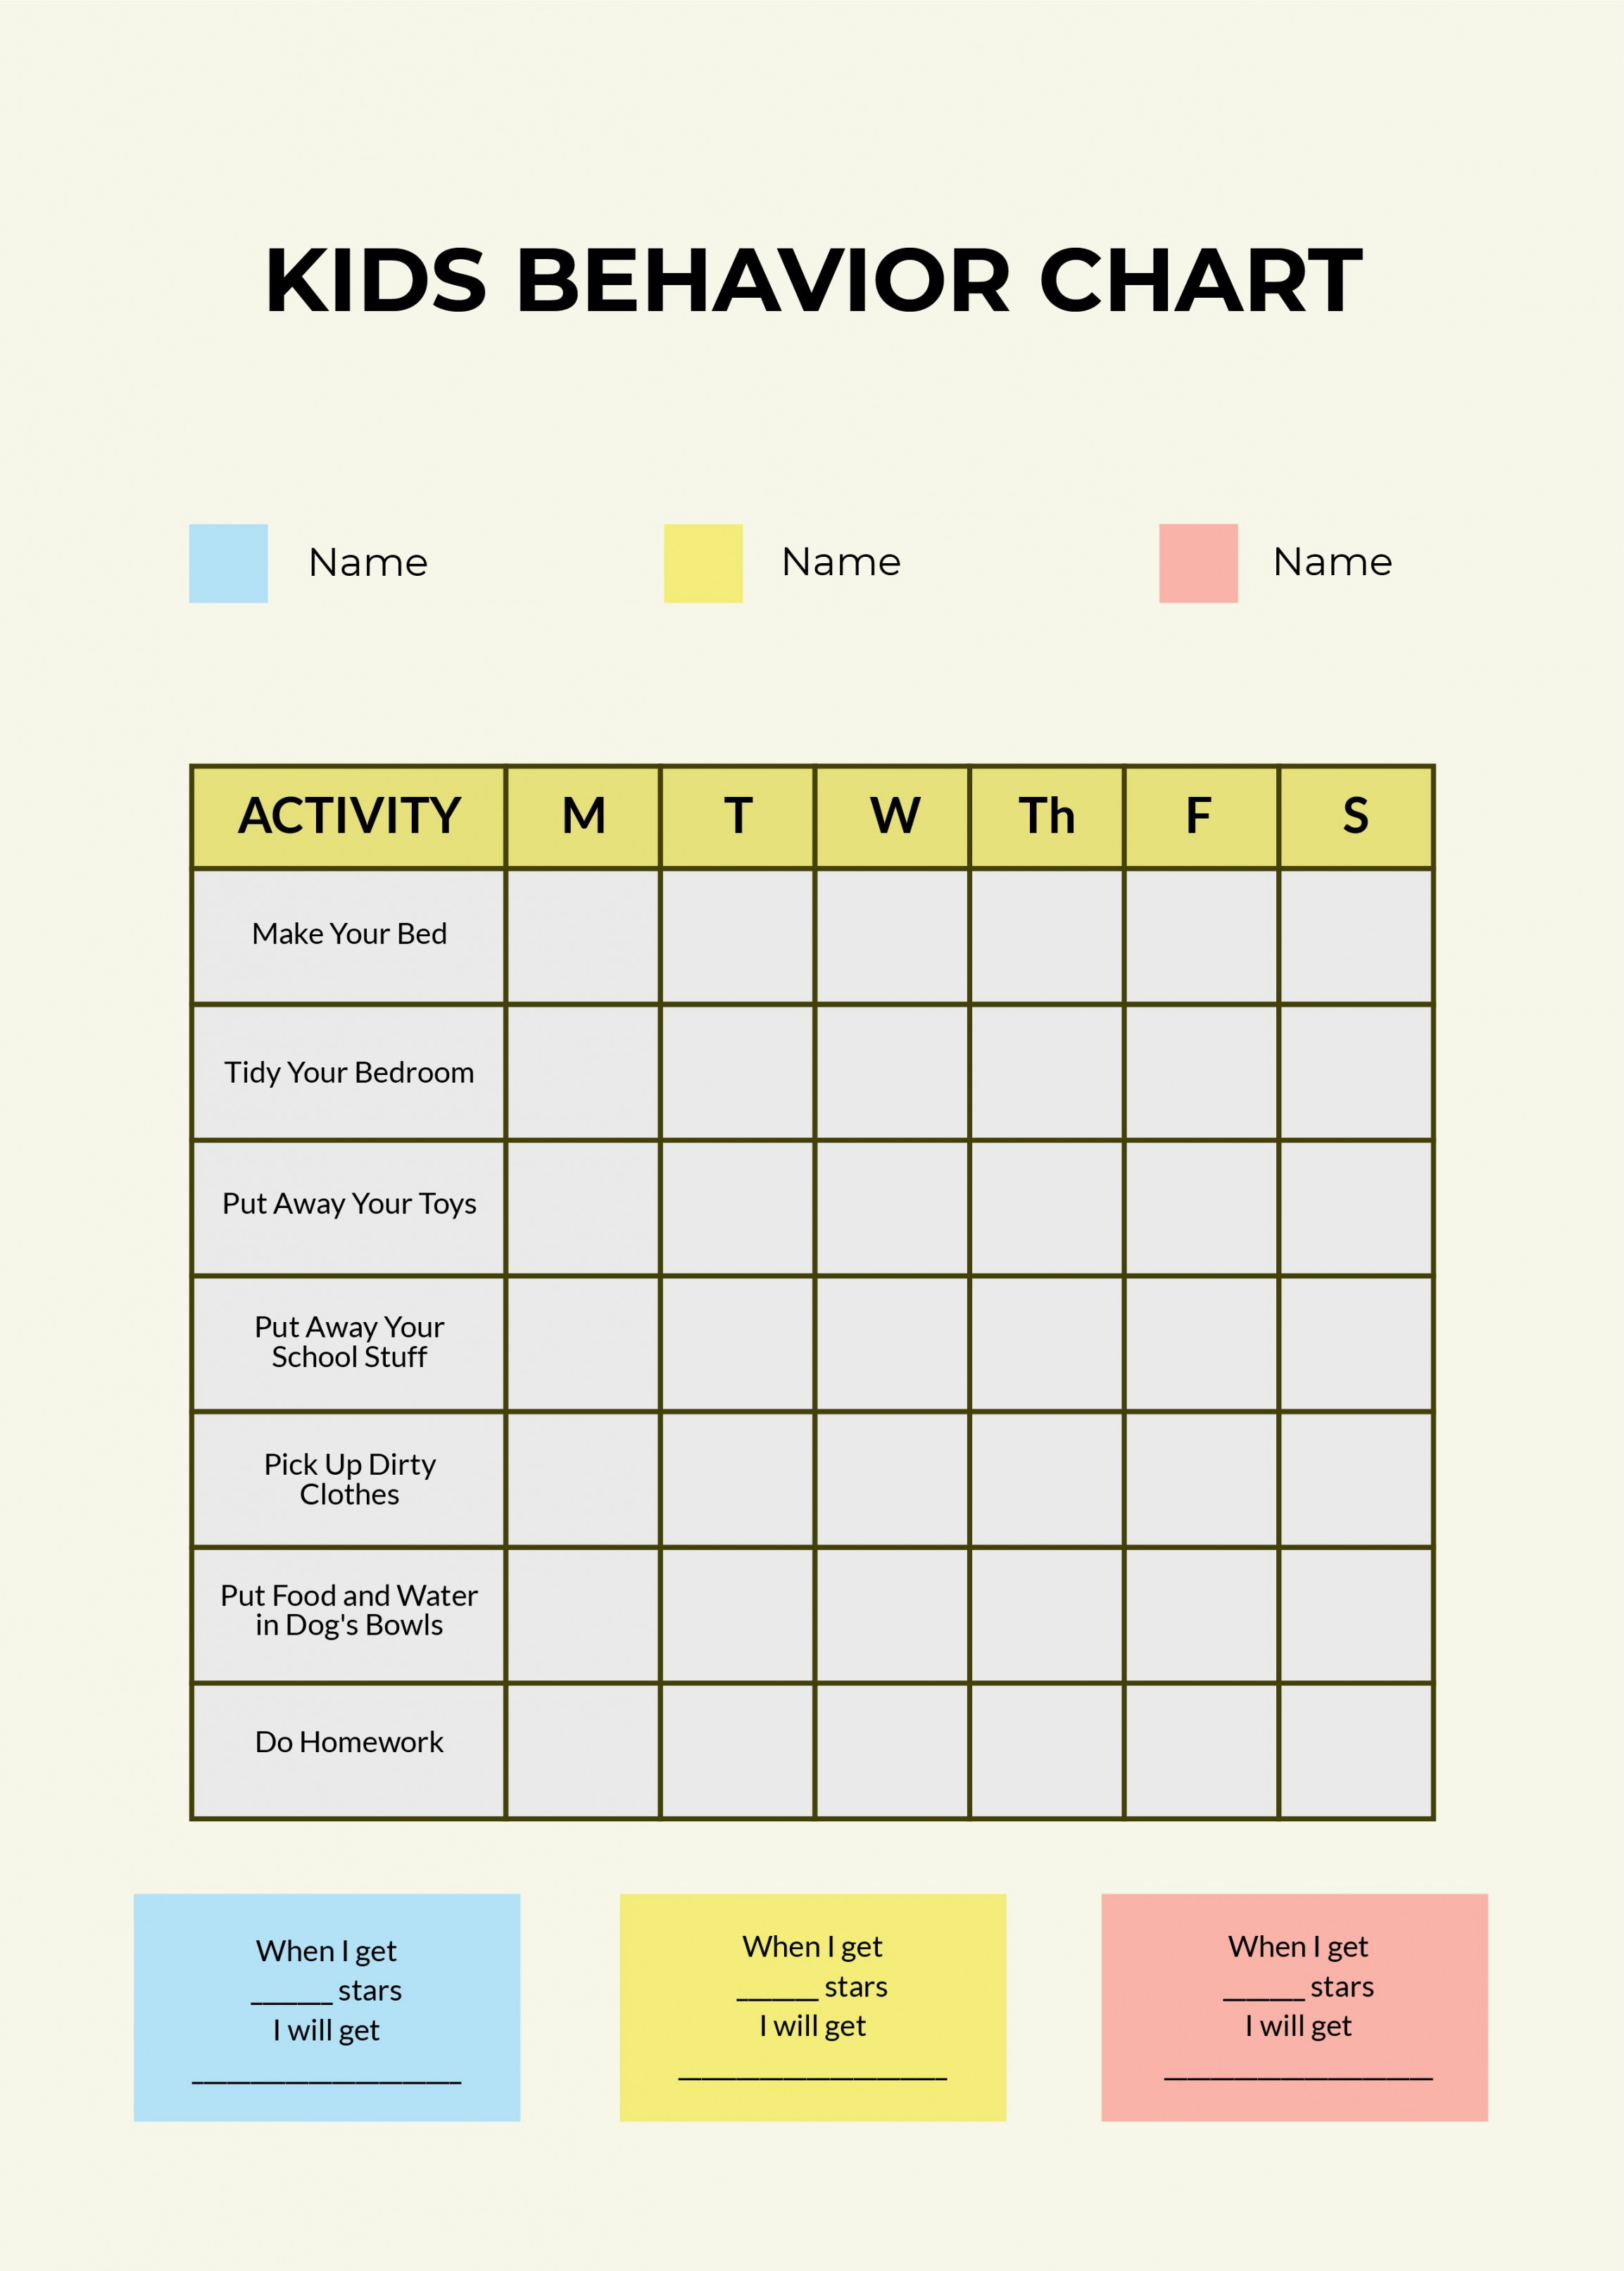 FREE Behavior Chart Template - Download in Word, PDF, Illustrator